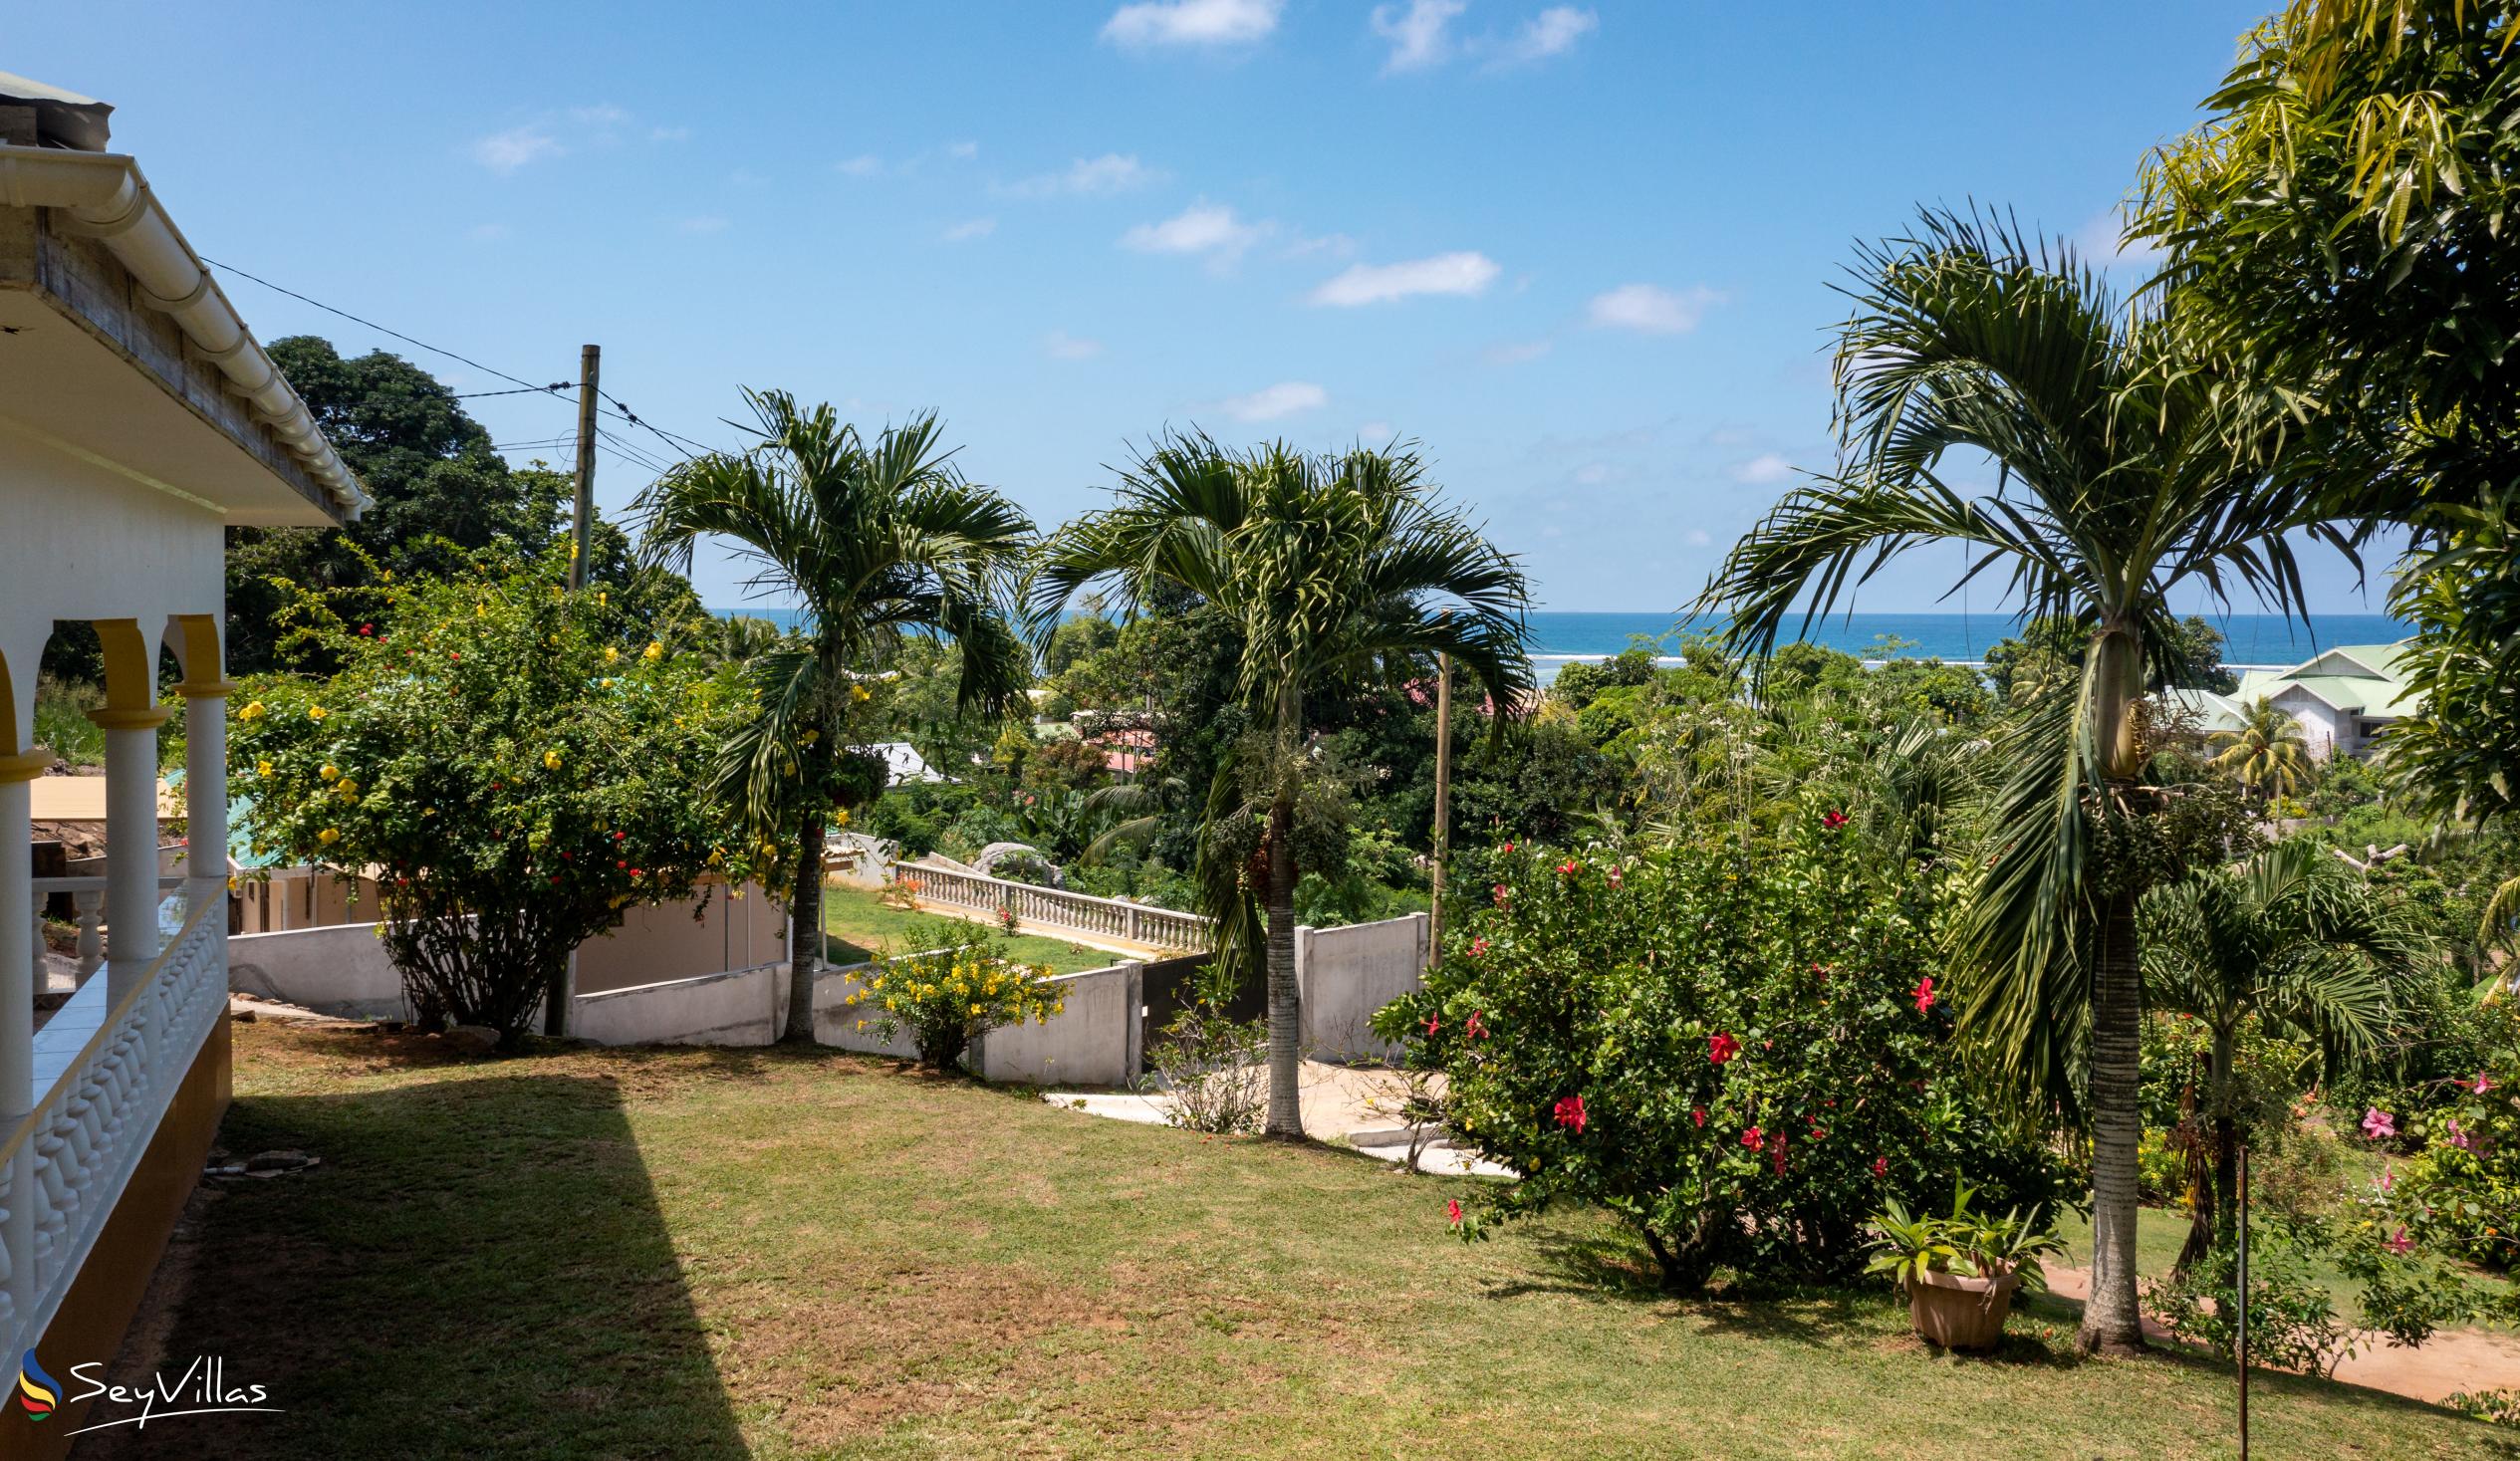 Foto 71: Maison Marikel - Villa con 2 camere - Mahé (Seychelles)